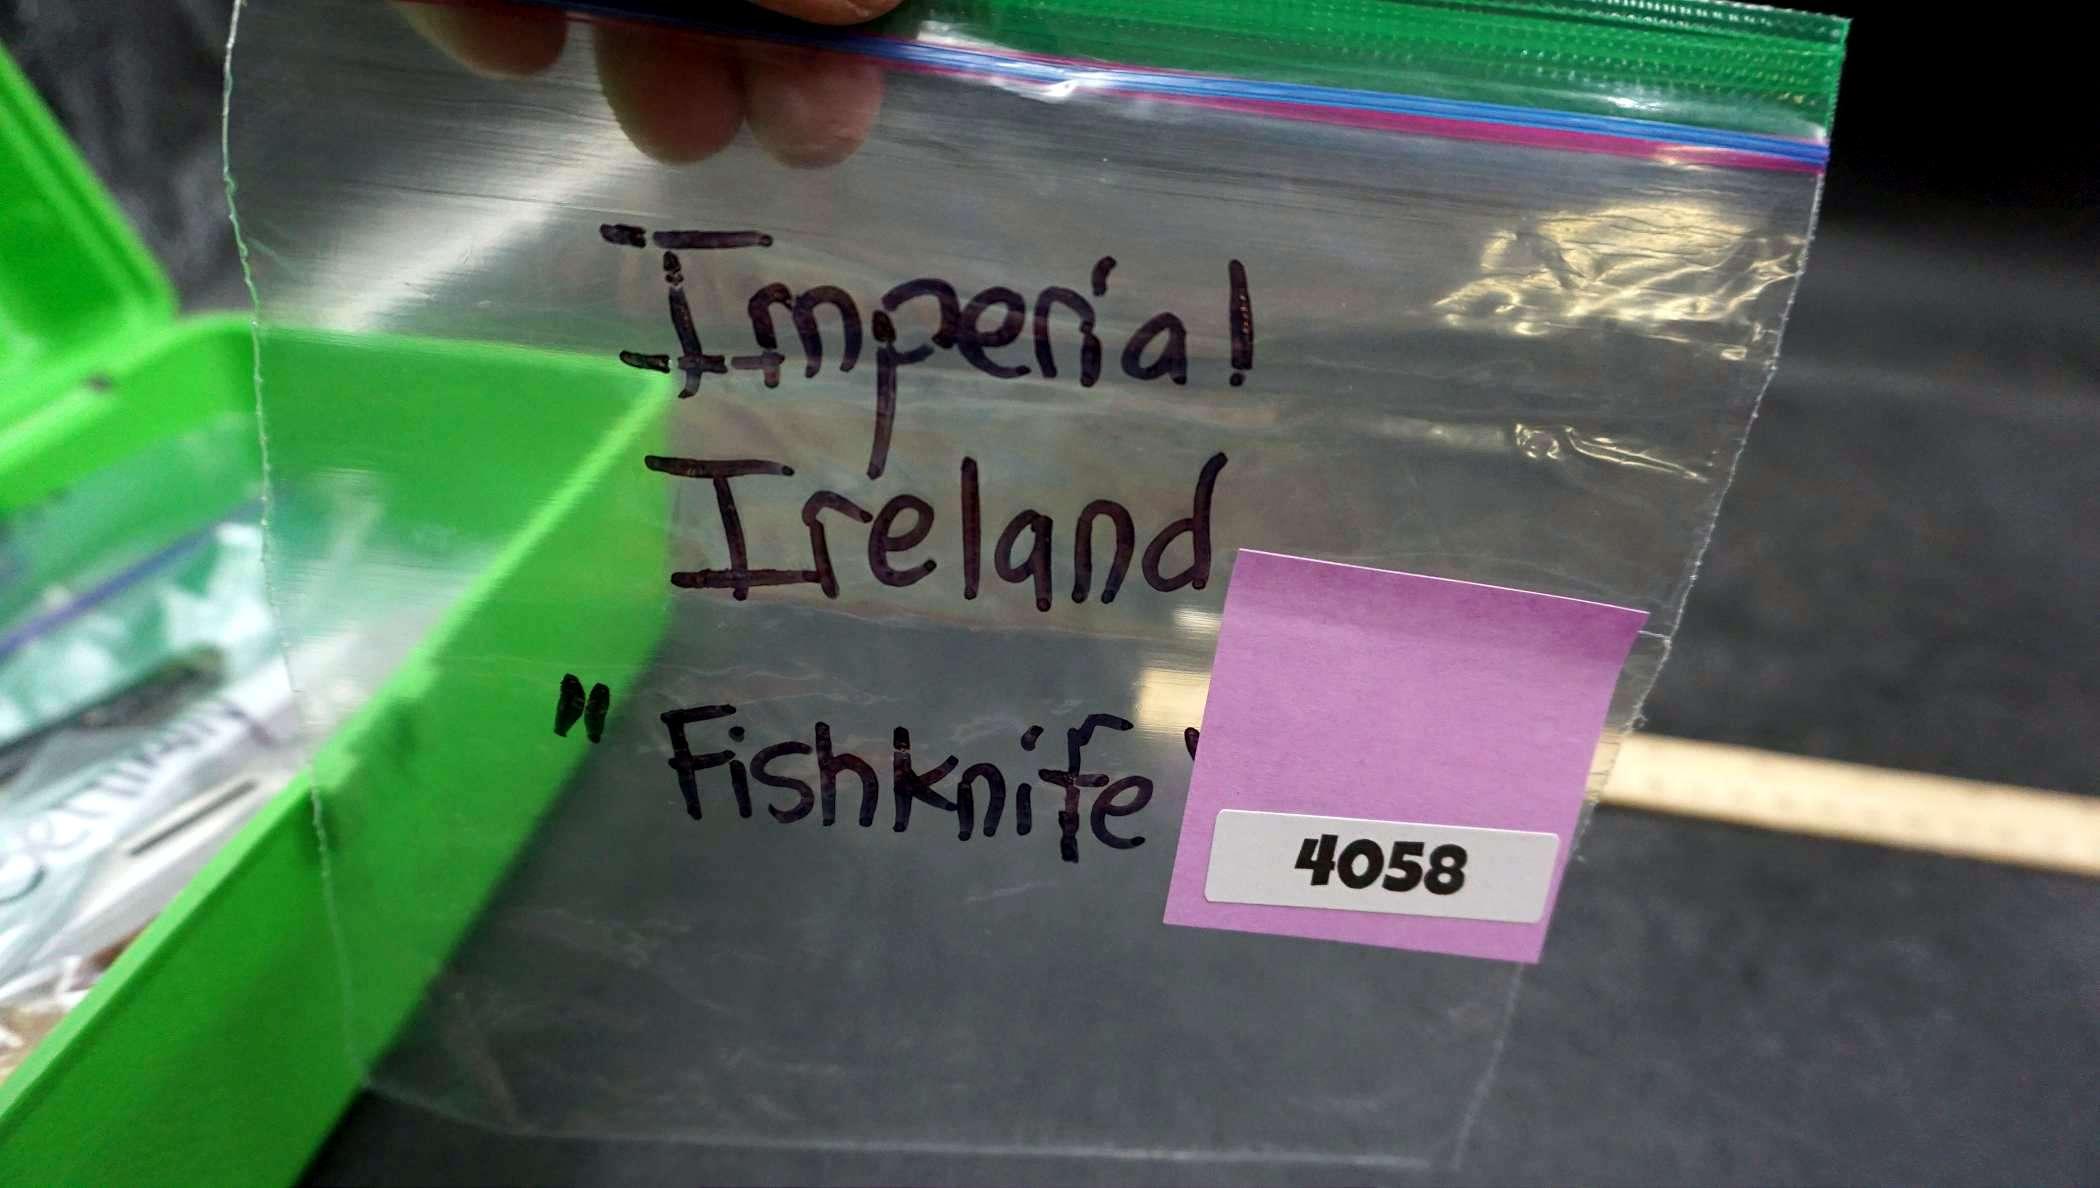 Imperial Ireland "Fish Knife" Pocket Knife